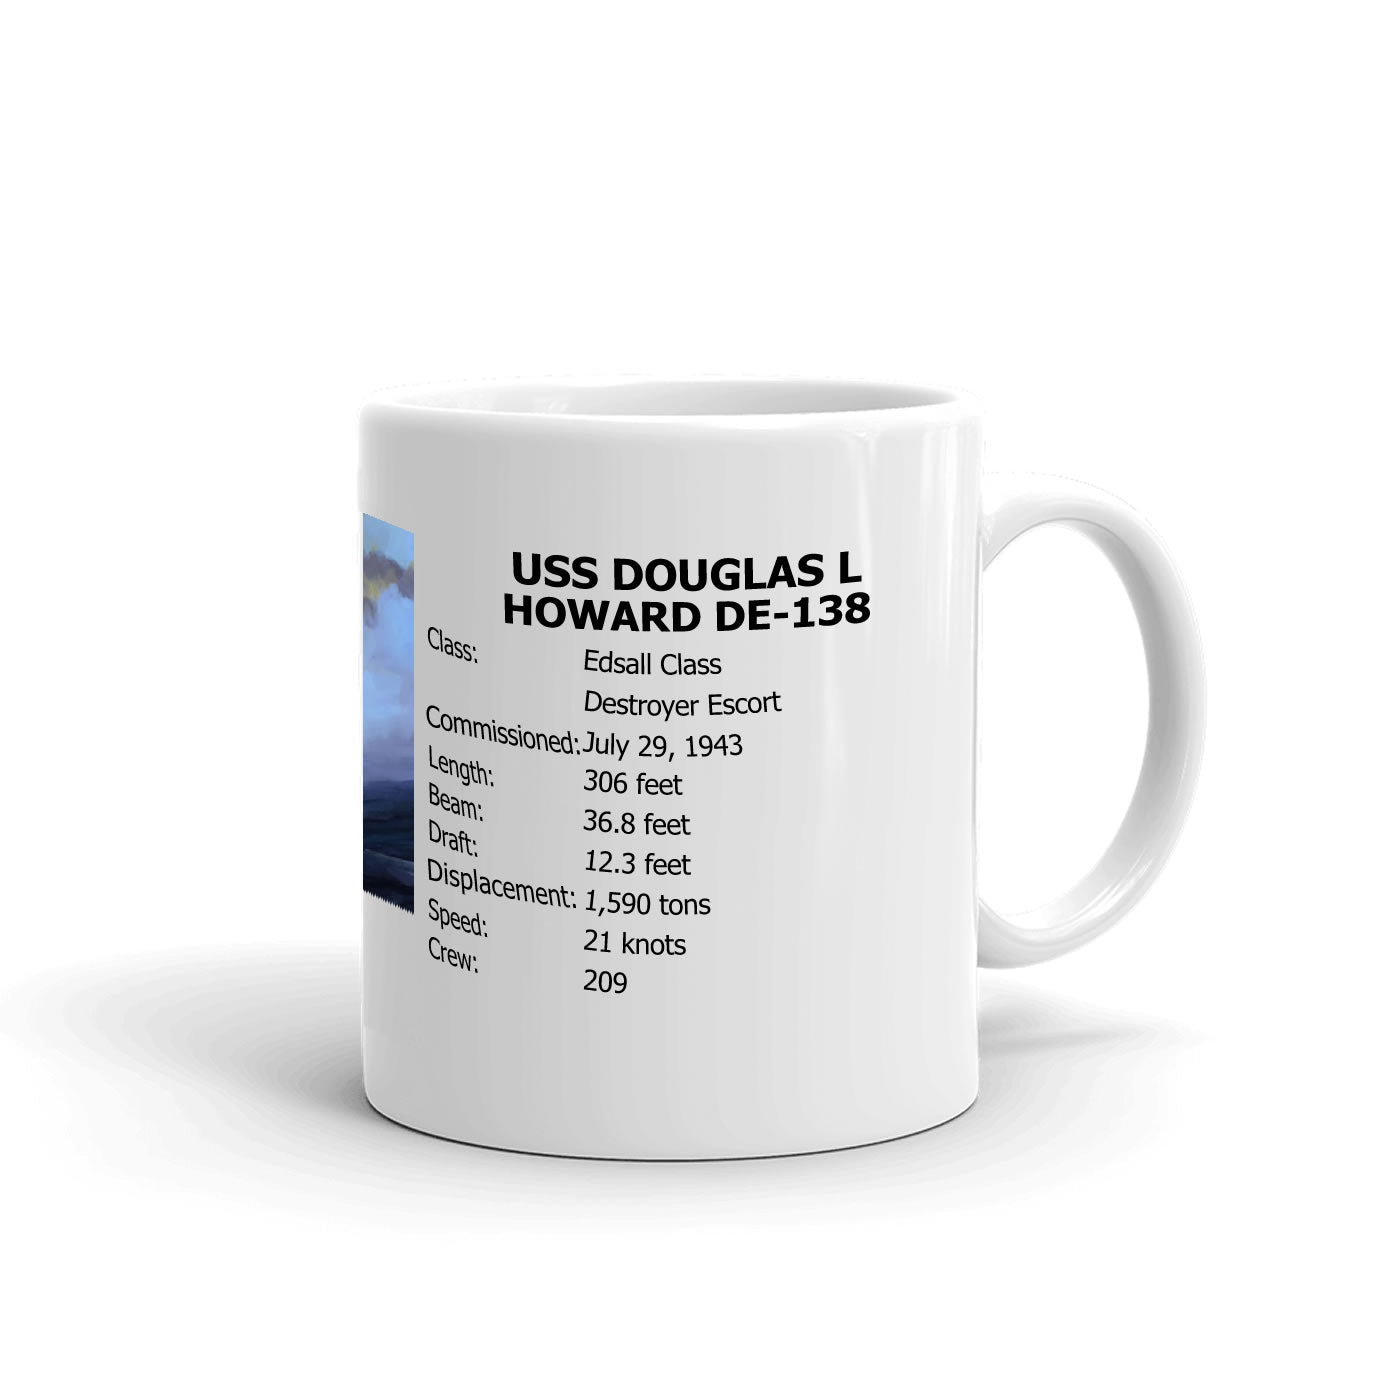 USS Douglas L Howard DE-138 Coffee Cup Mug Right Handle